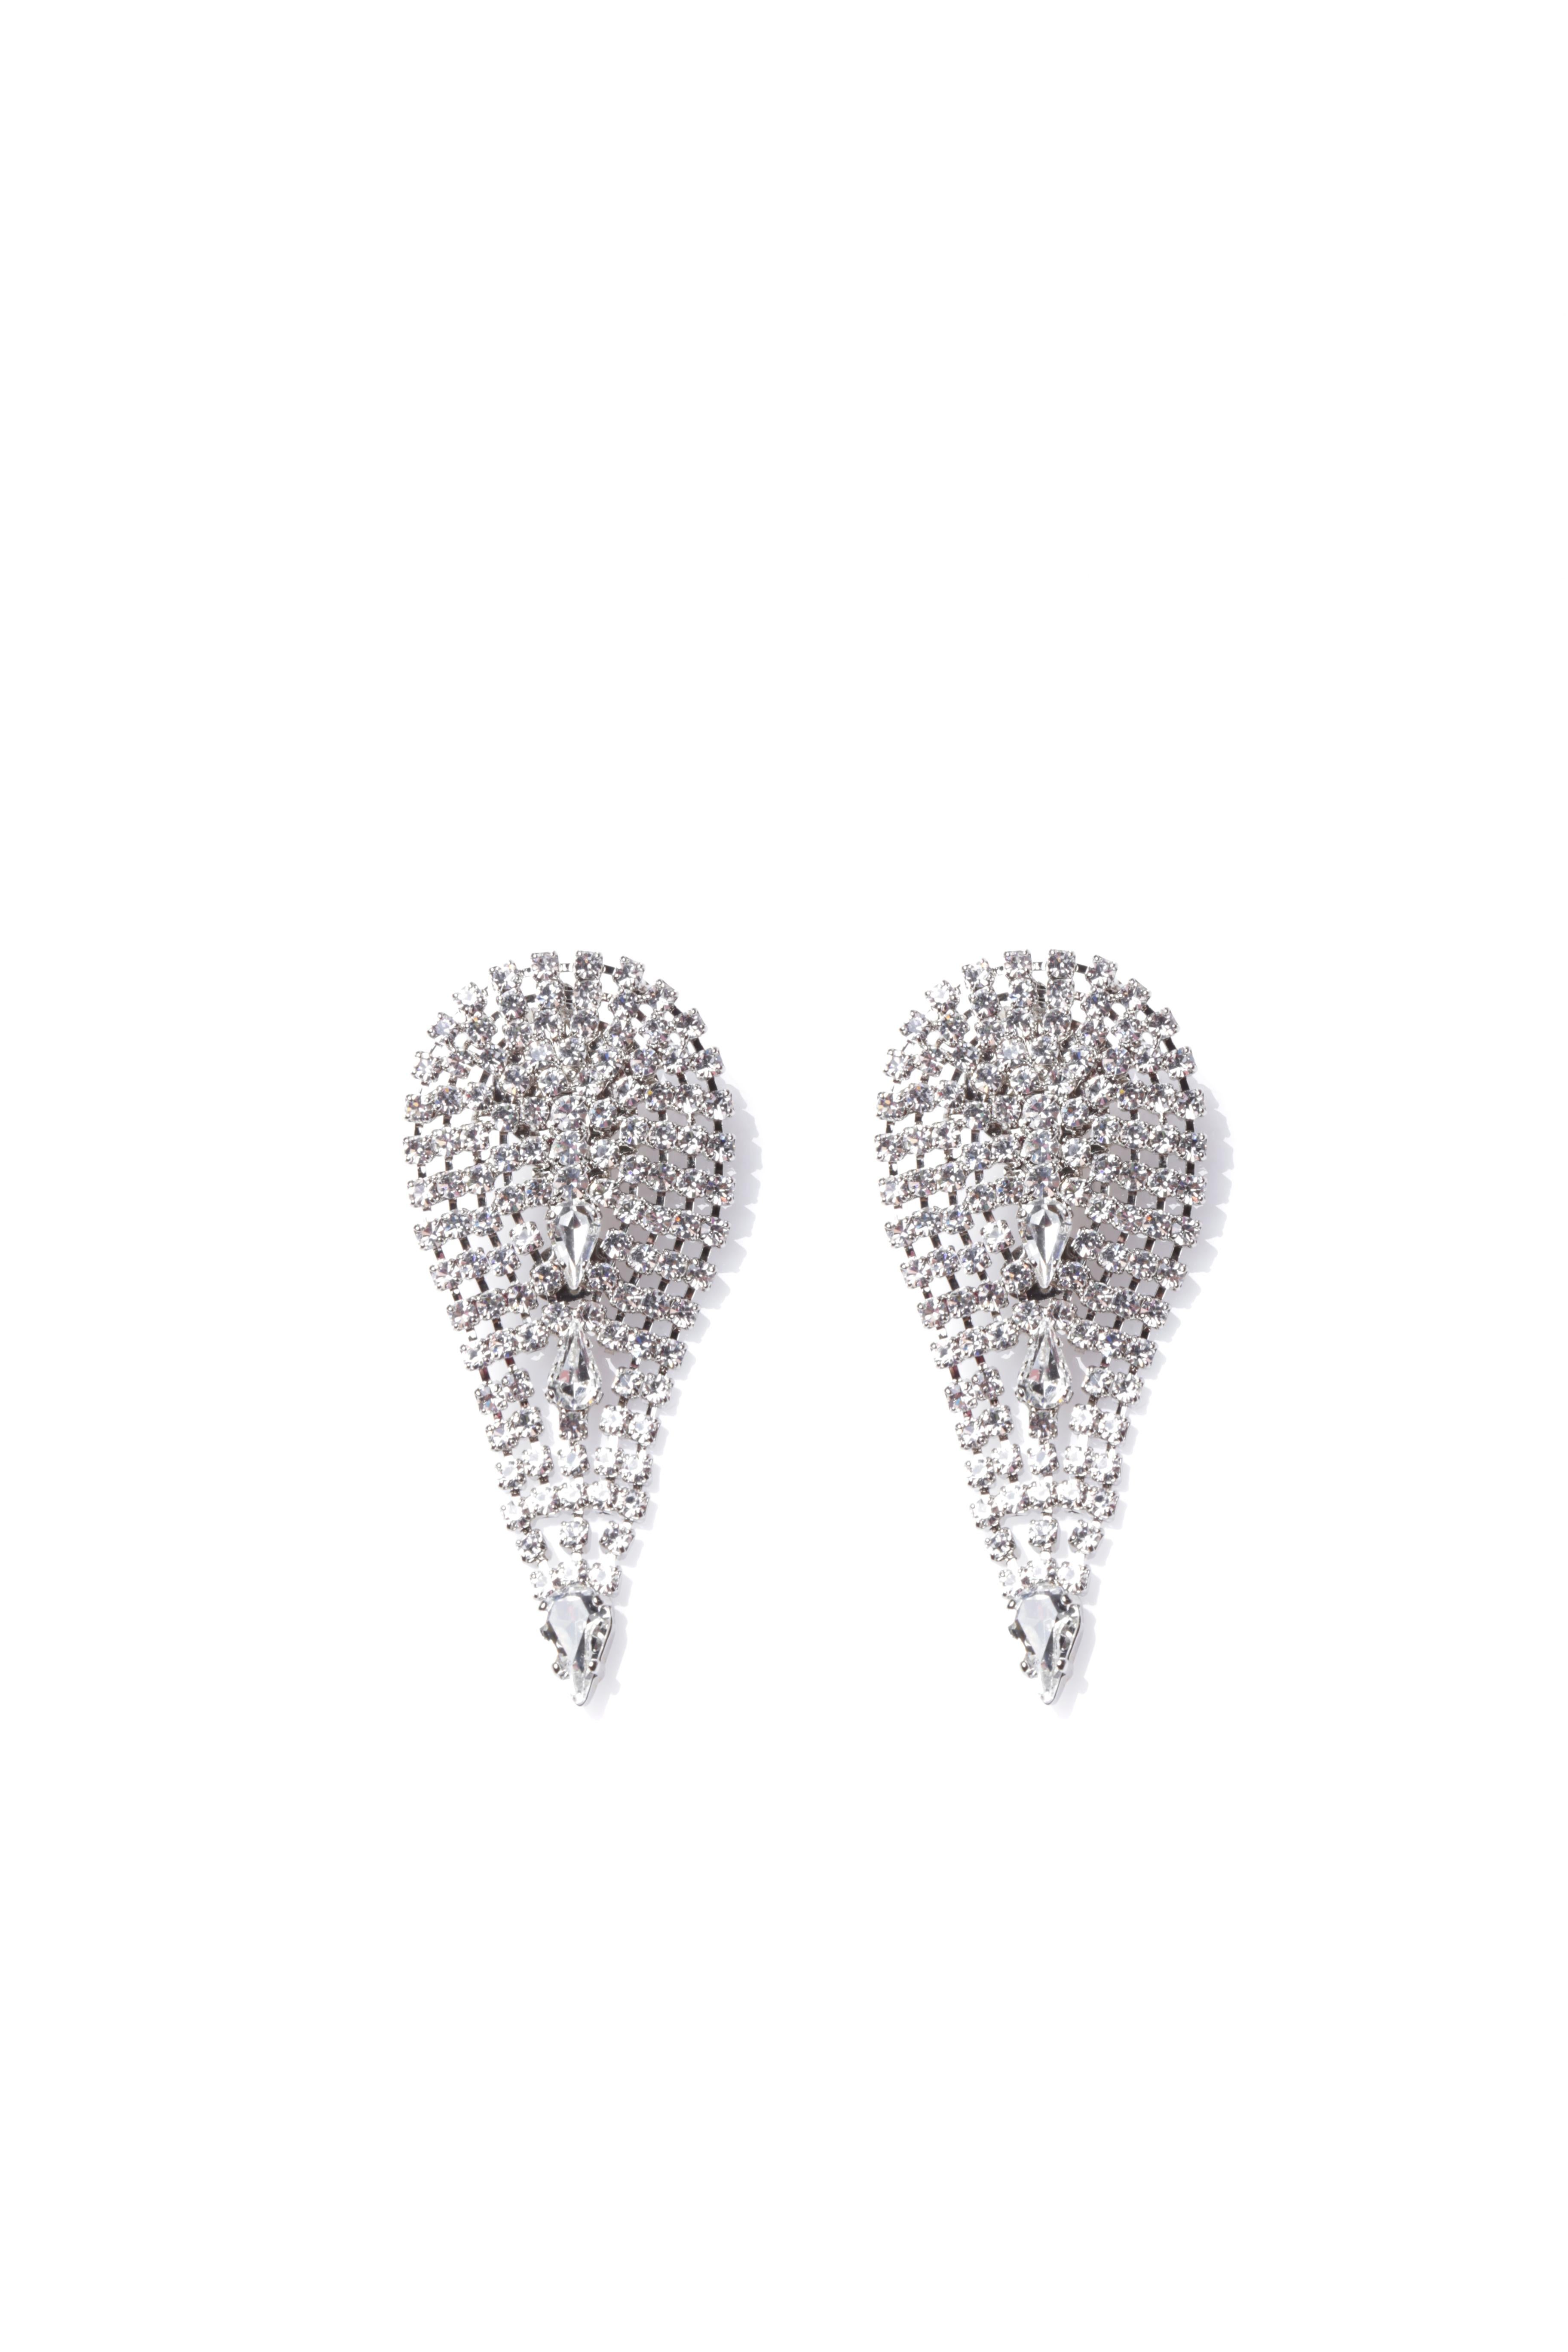 LisaC crystal swarovski pendant drops earrings 8